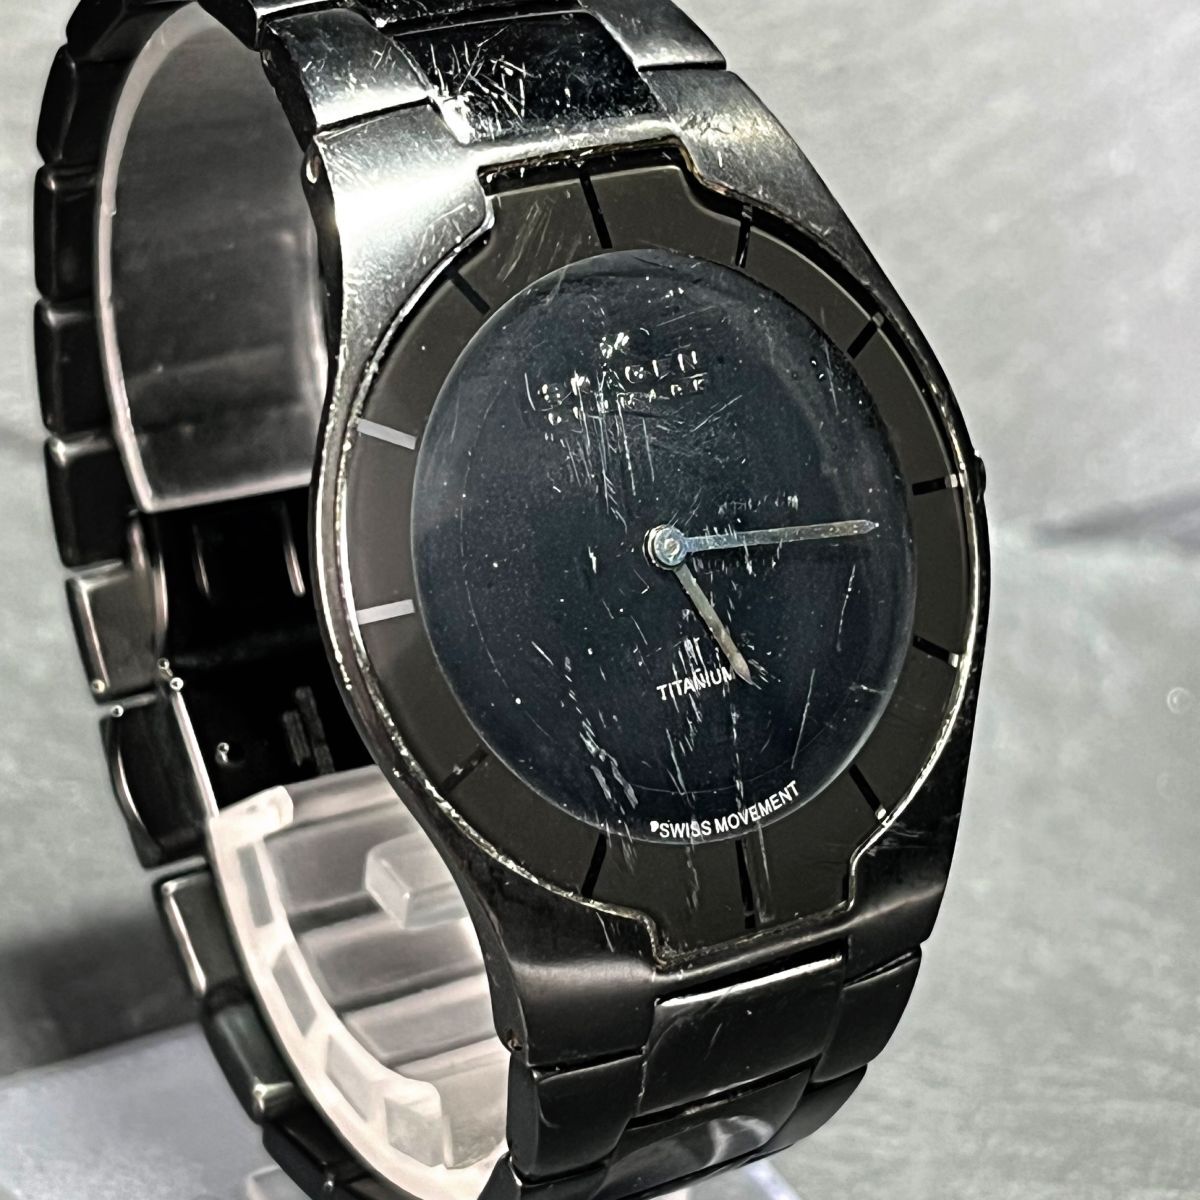 SKAGEN スカーゲン Black Label ブラックレーベル 585XLTMXB 腕時計 アナログ クオーツ ２針 ラウンド チタン メタルベルト 両開き式